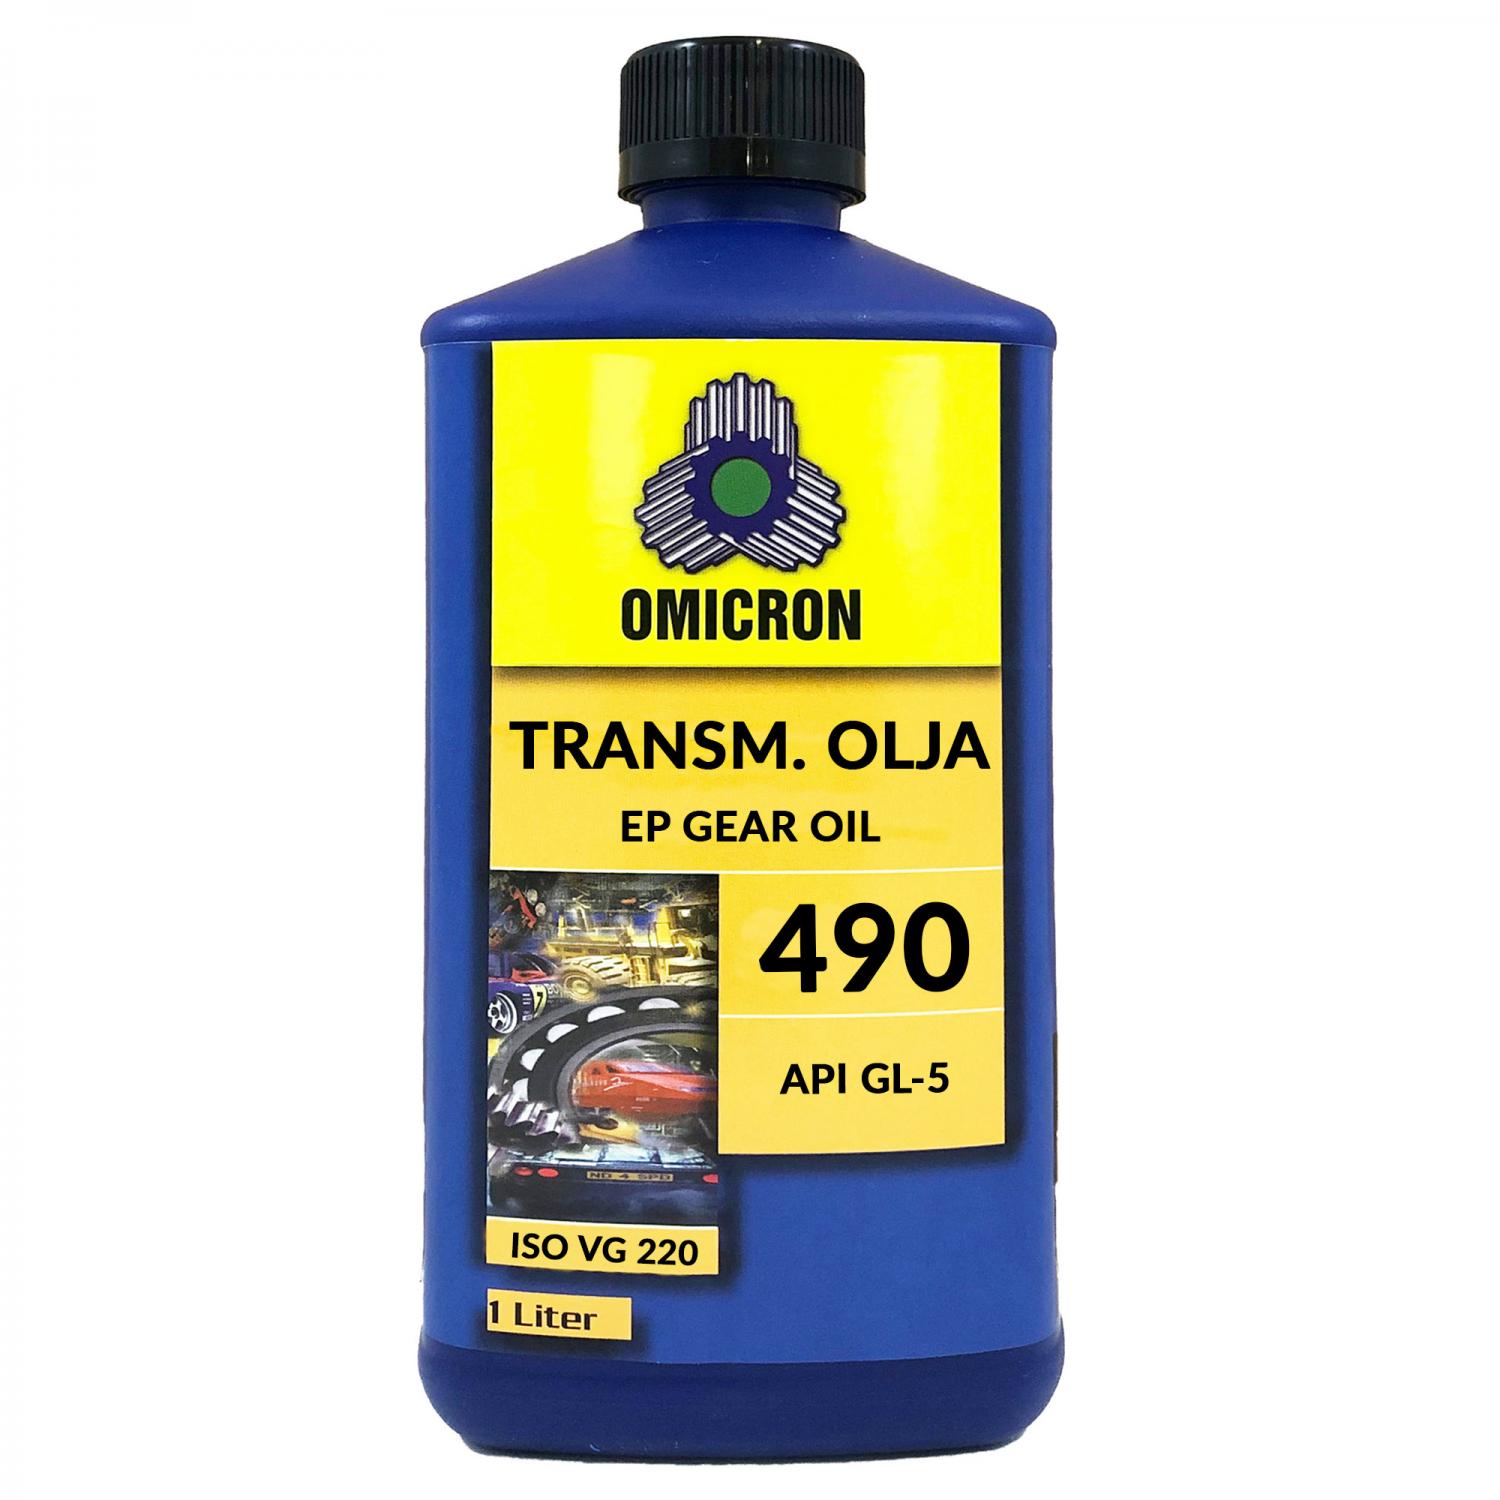 Omicron 490 ISO VG 220 Transmissionsolja API GL...